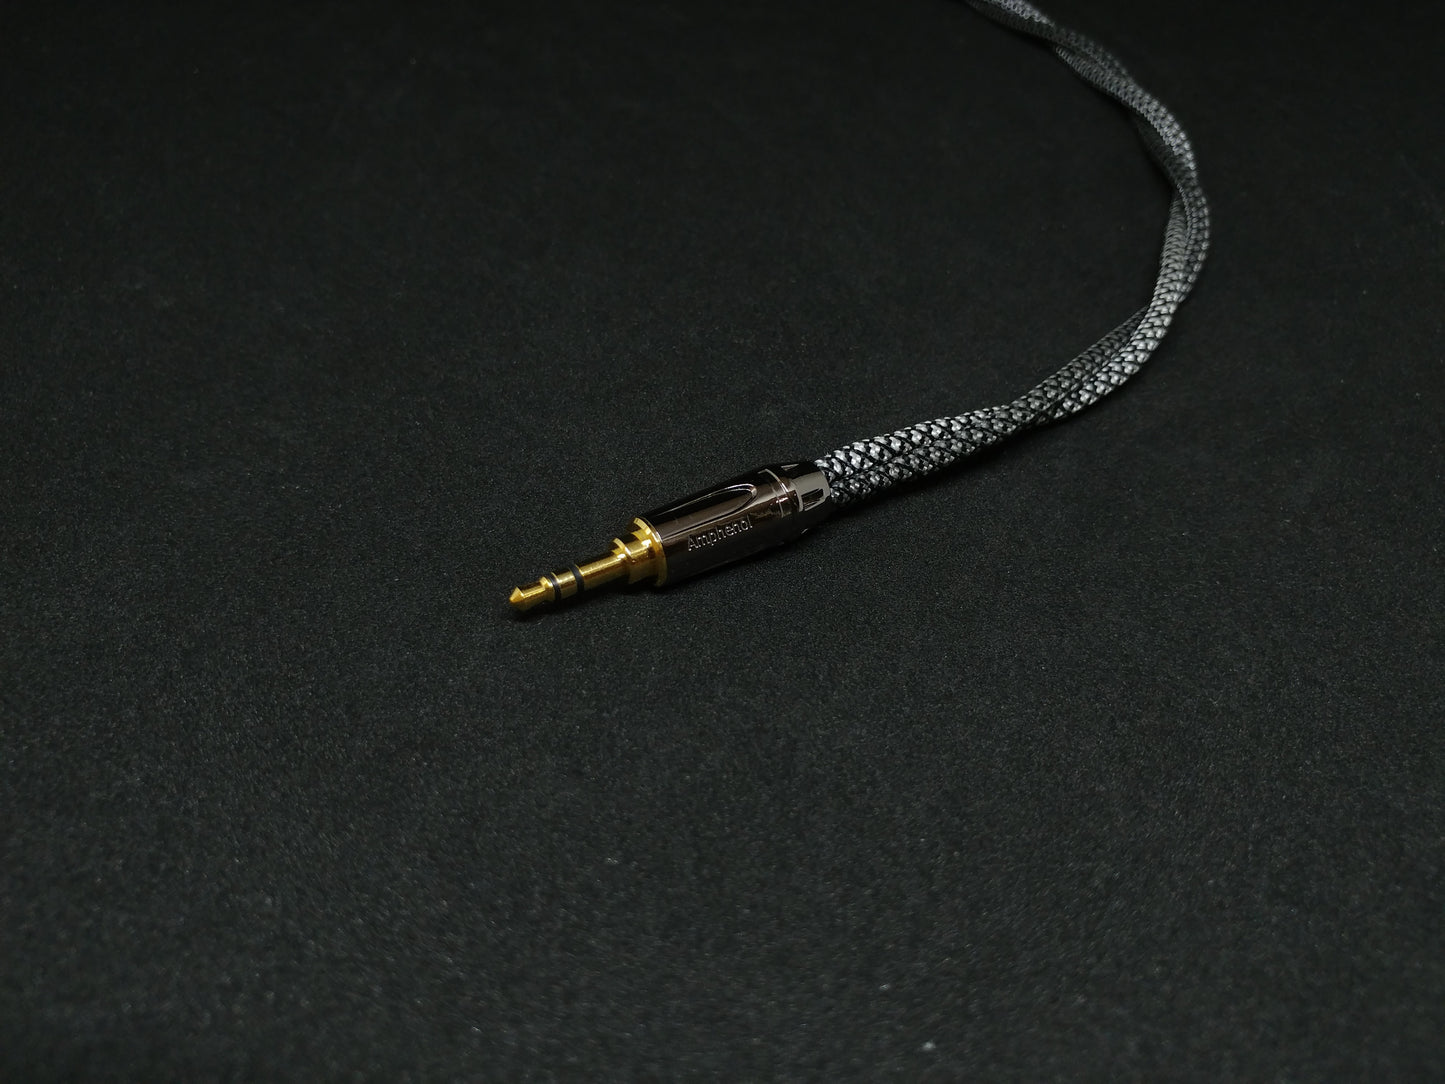 Dual 4 Pin Mini XLR Custom Headphone Cable | Taijitu